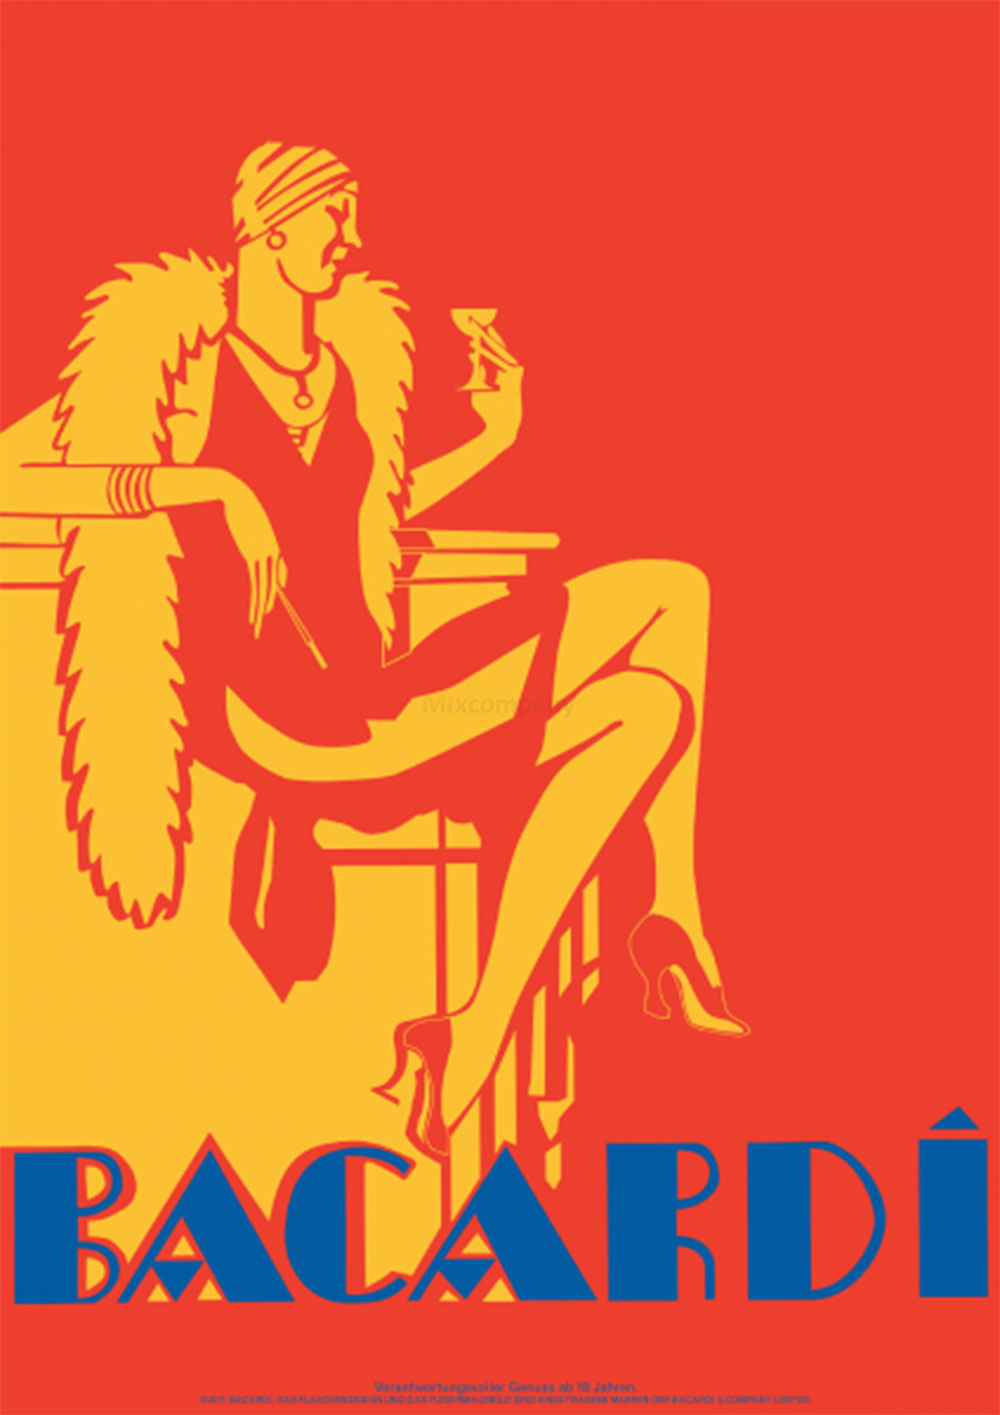 Geschenkset Bacardi Carta Oro Gold Rum 0,7l (40% Vol) + 2x Coca Cola 0,2L Mehrweg + 2xGläser Glas inkl. Pfand Mojito Longdrinkglas Cuba Libre Cocktail Bar - [Enthält Sulfite]